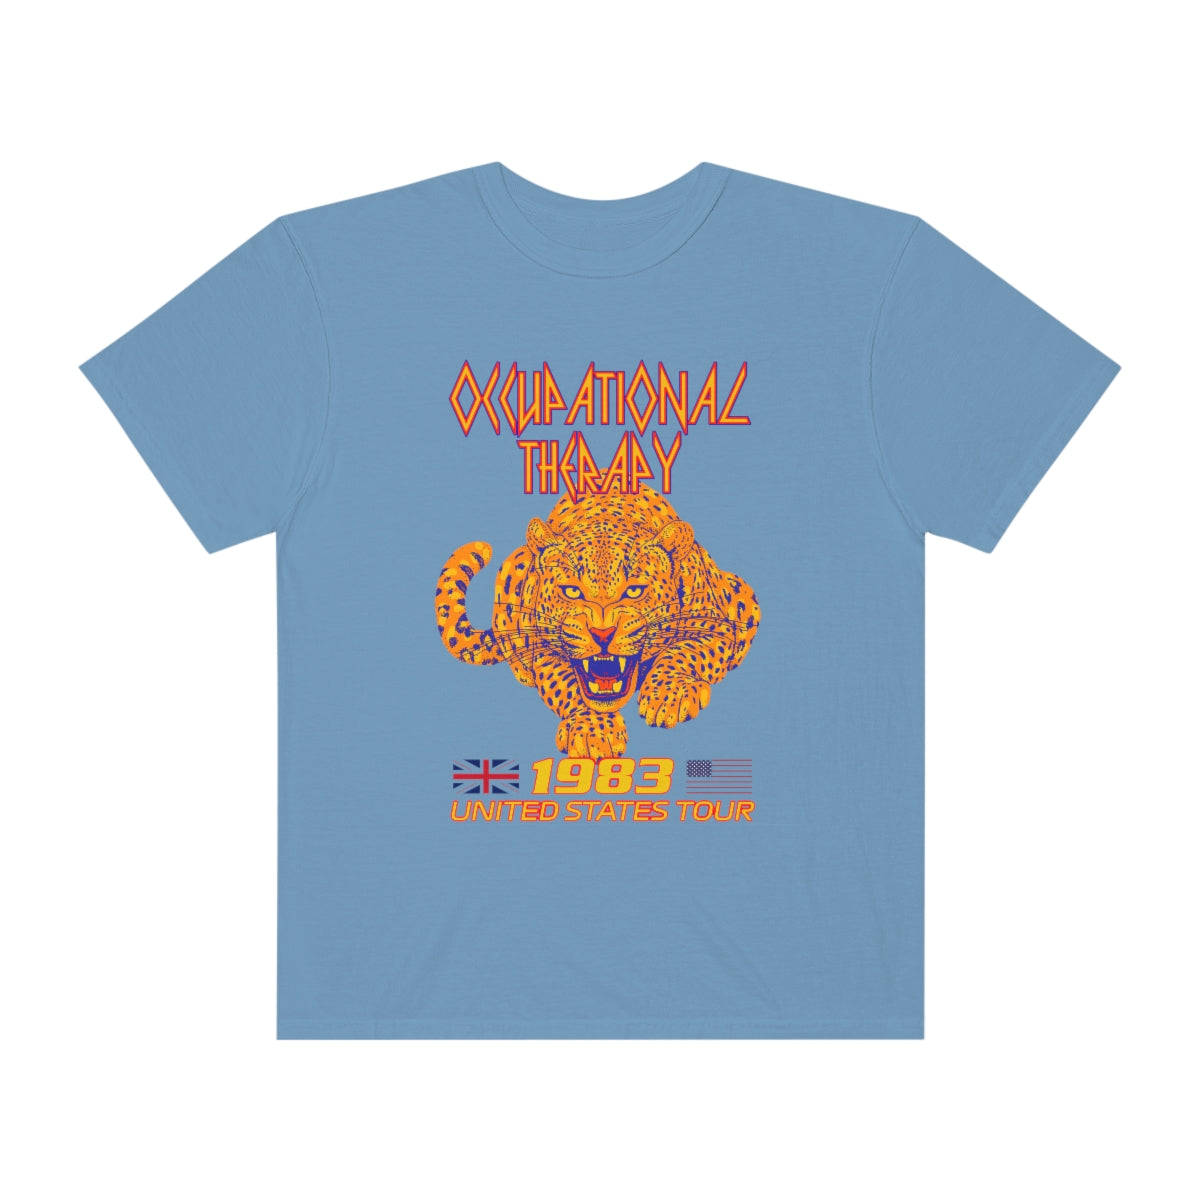 Def OT Band Inspired Comfort Colors T-Shirt